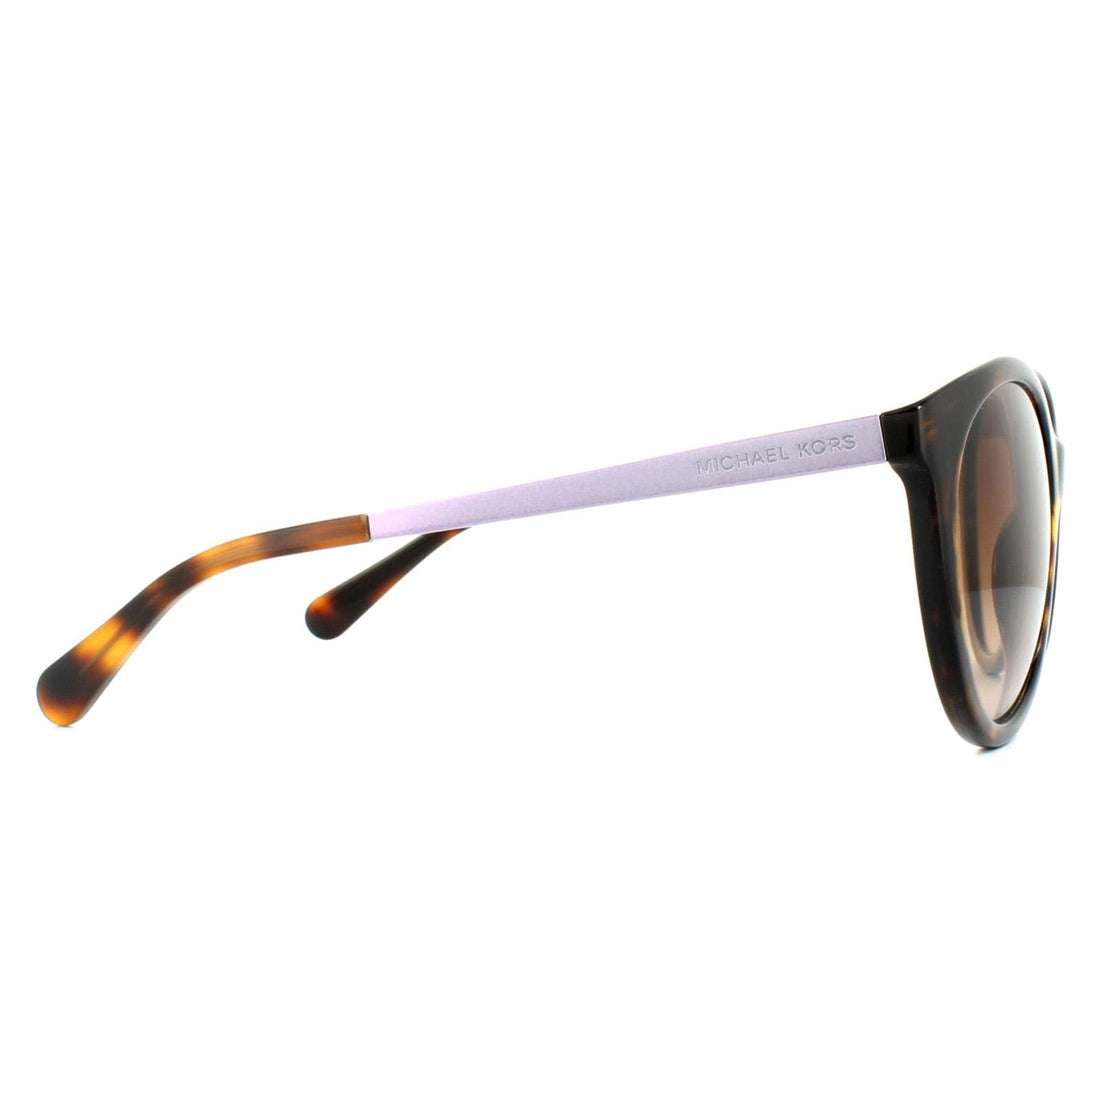 Michael Kors Sunglasses Island Tropics 2034 3200/13 Dark Havana Light Brown Gradient